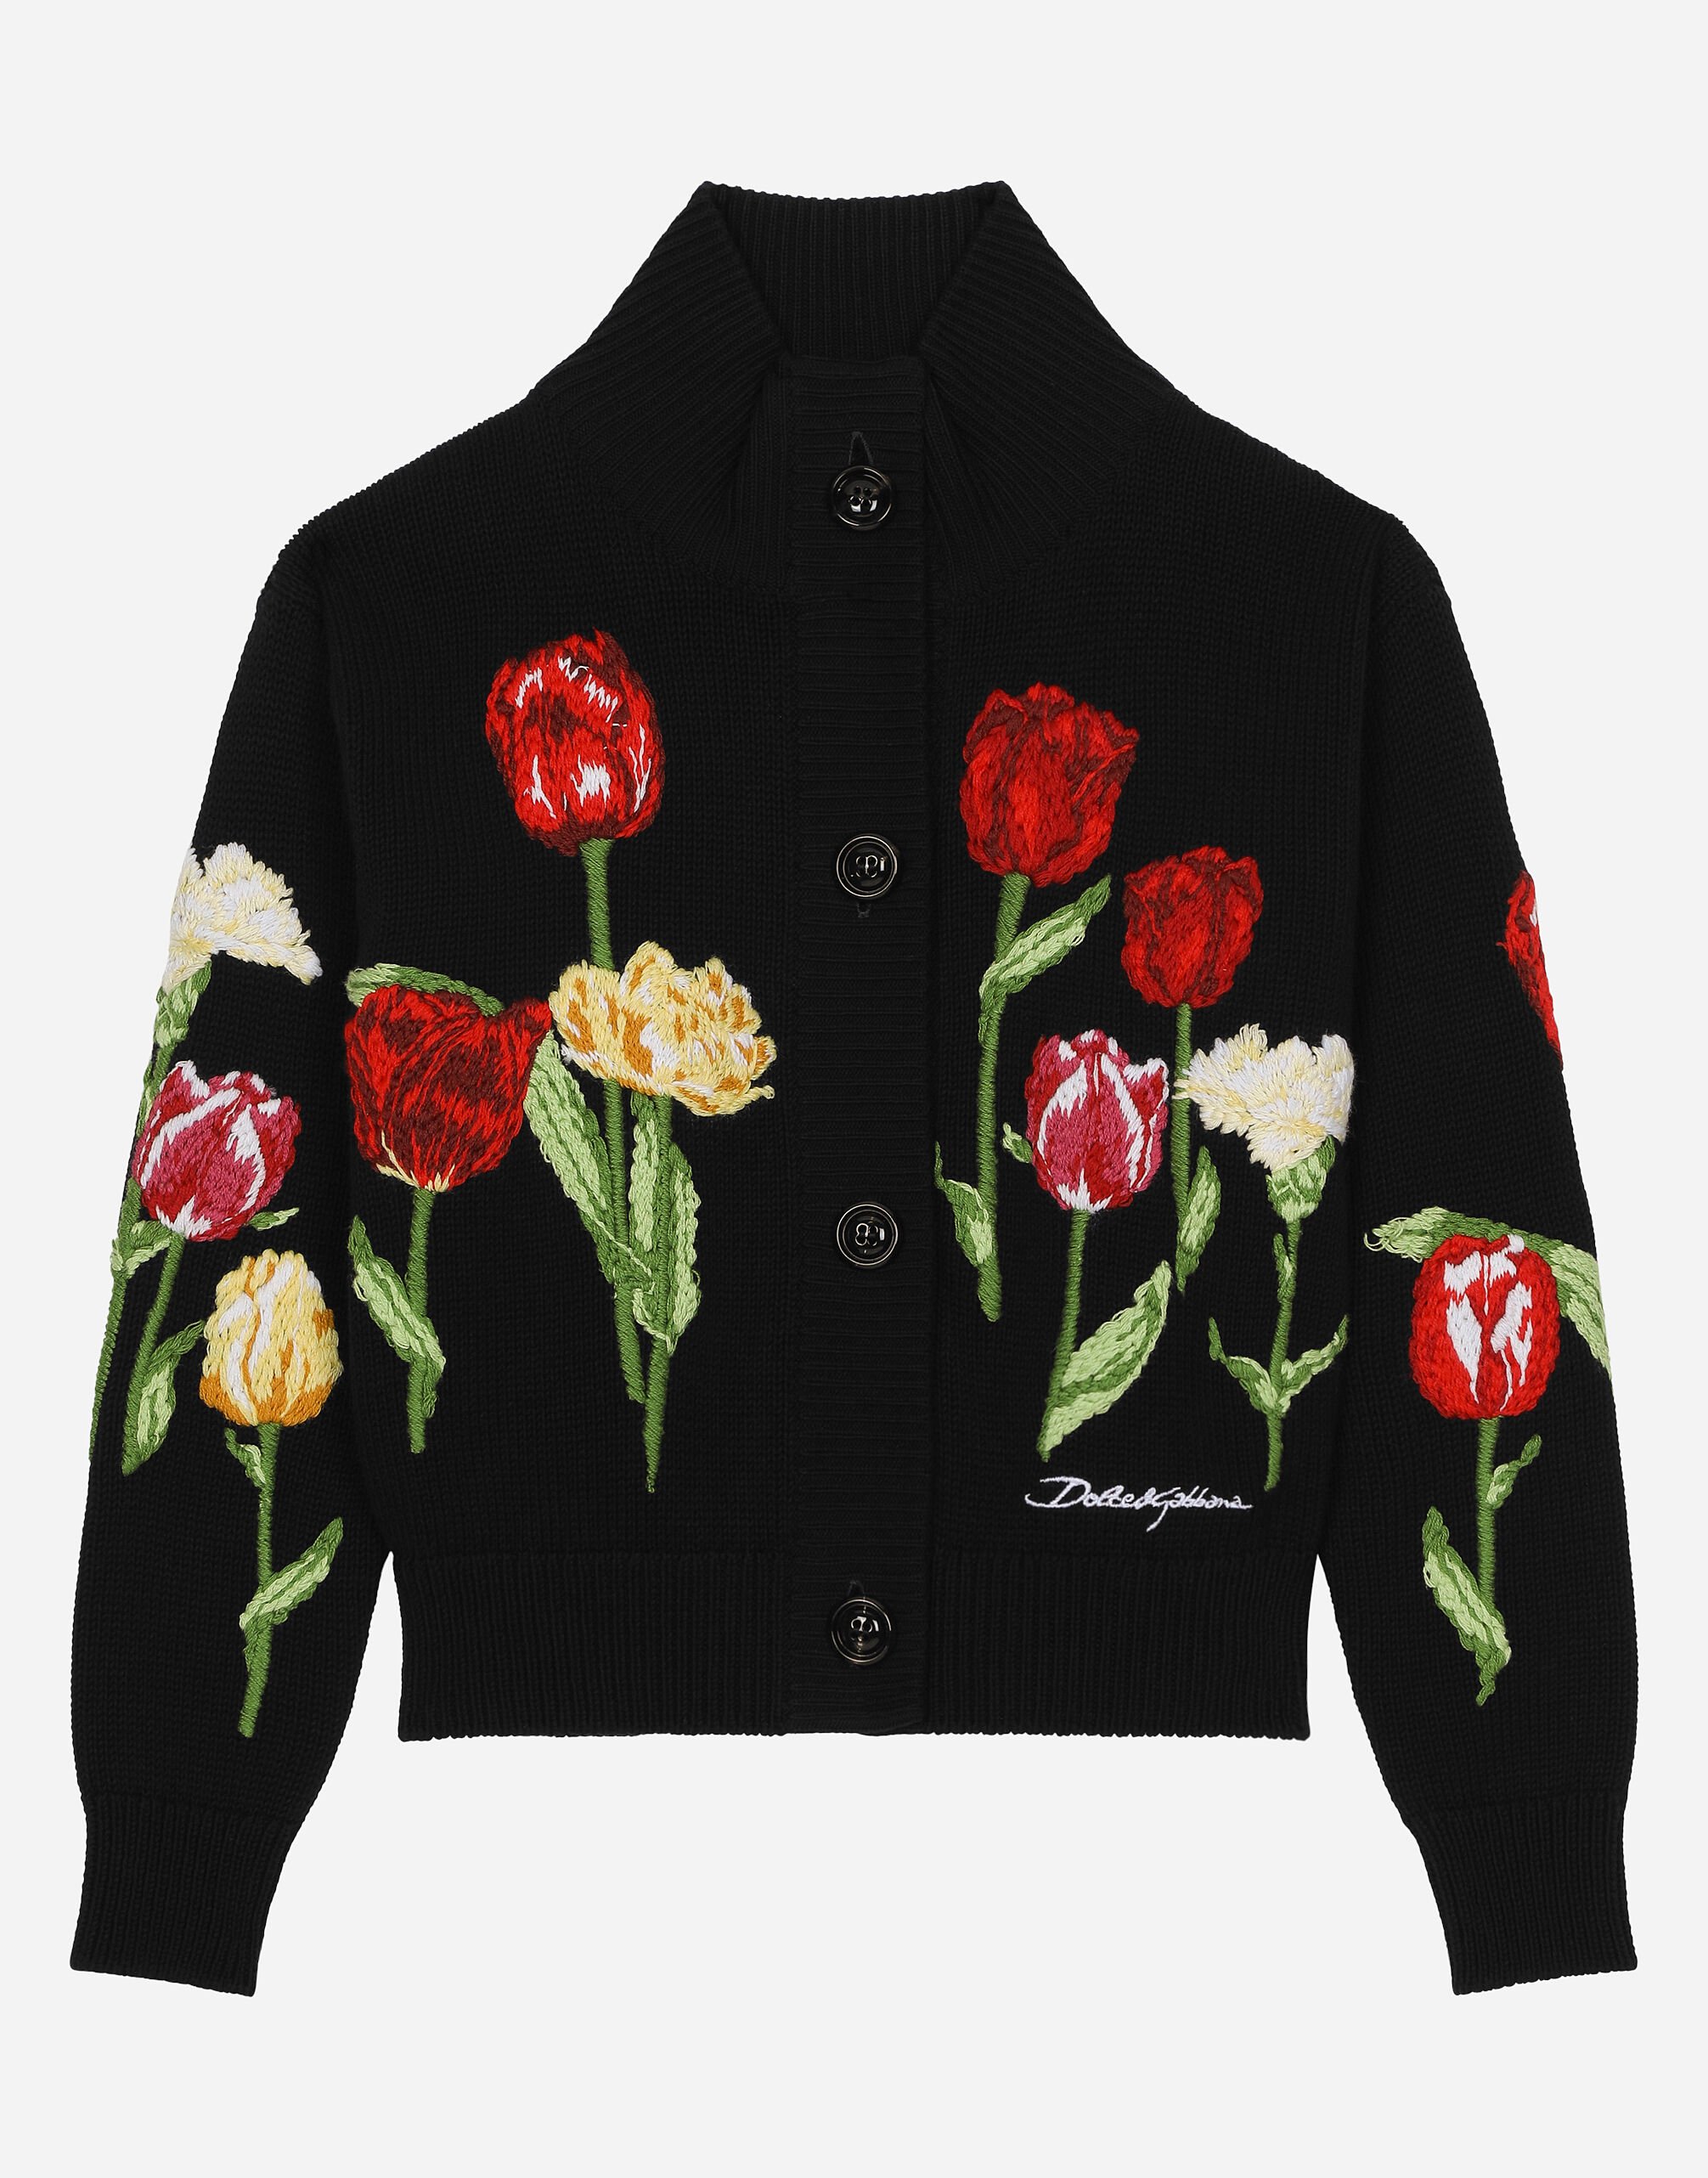 ${brand} Трикотажный кардиган с тюльпанами и логотипом Dolce&Gabbana ${colorDescription} ${masterID}